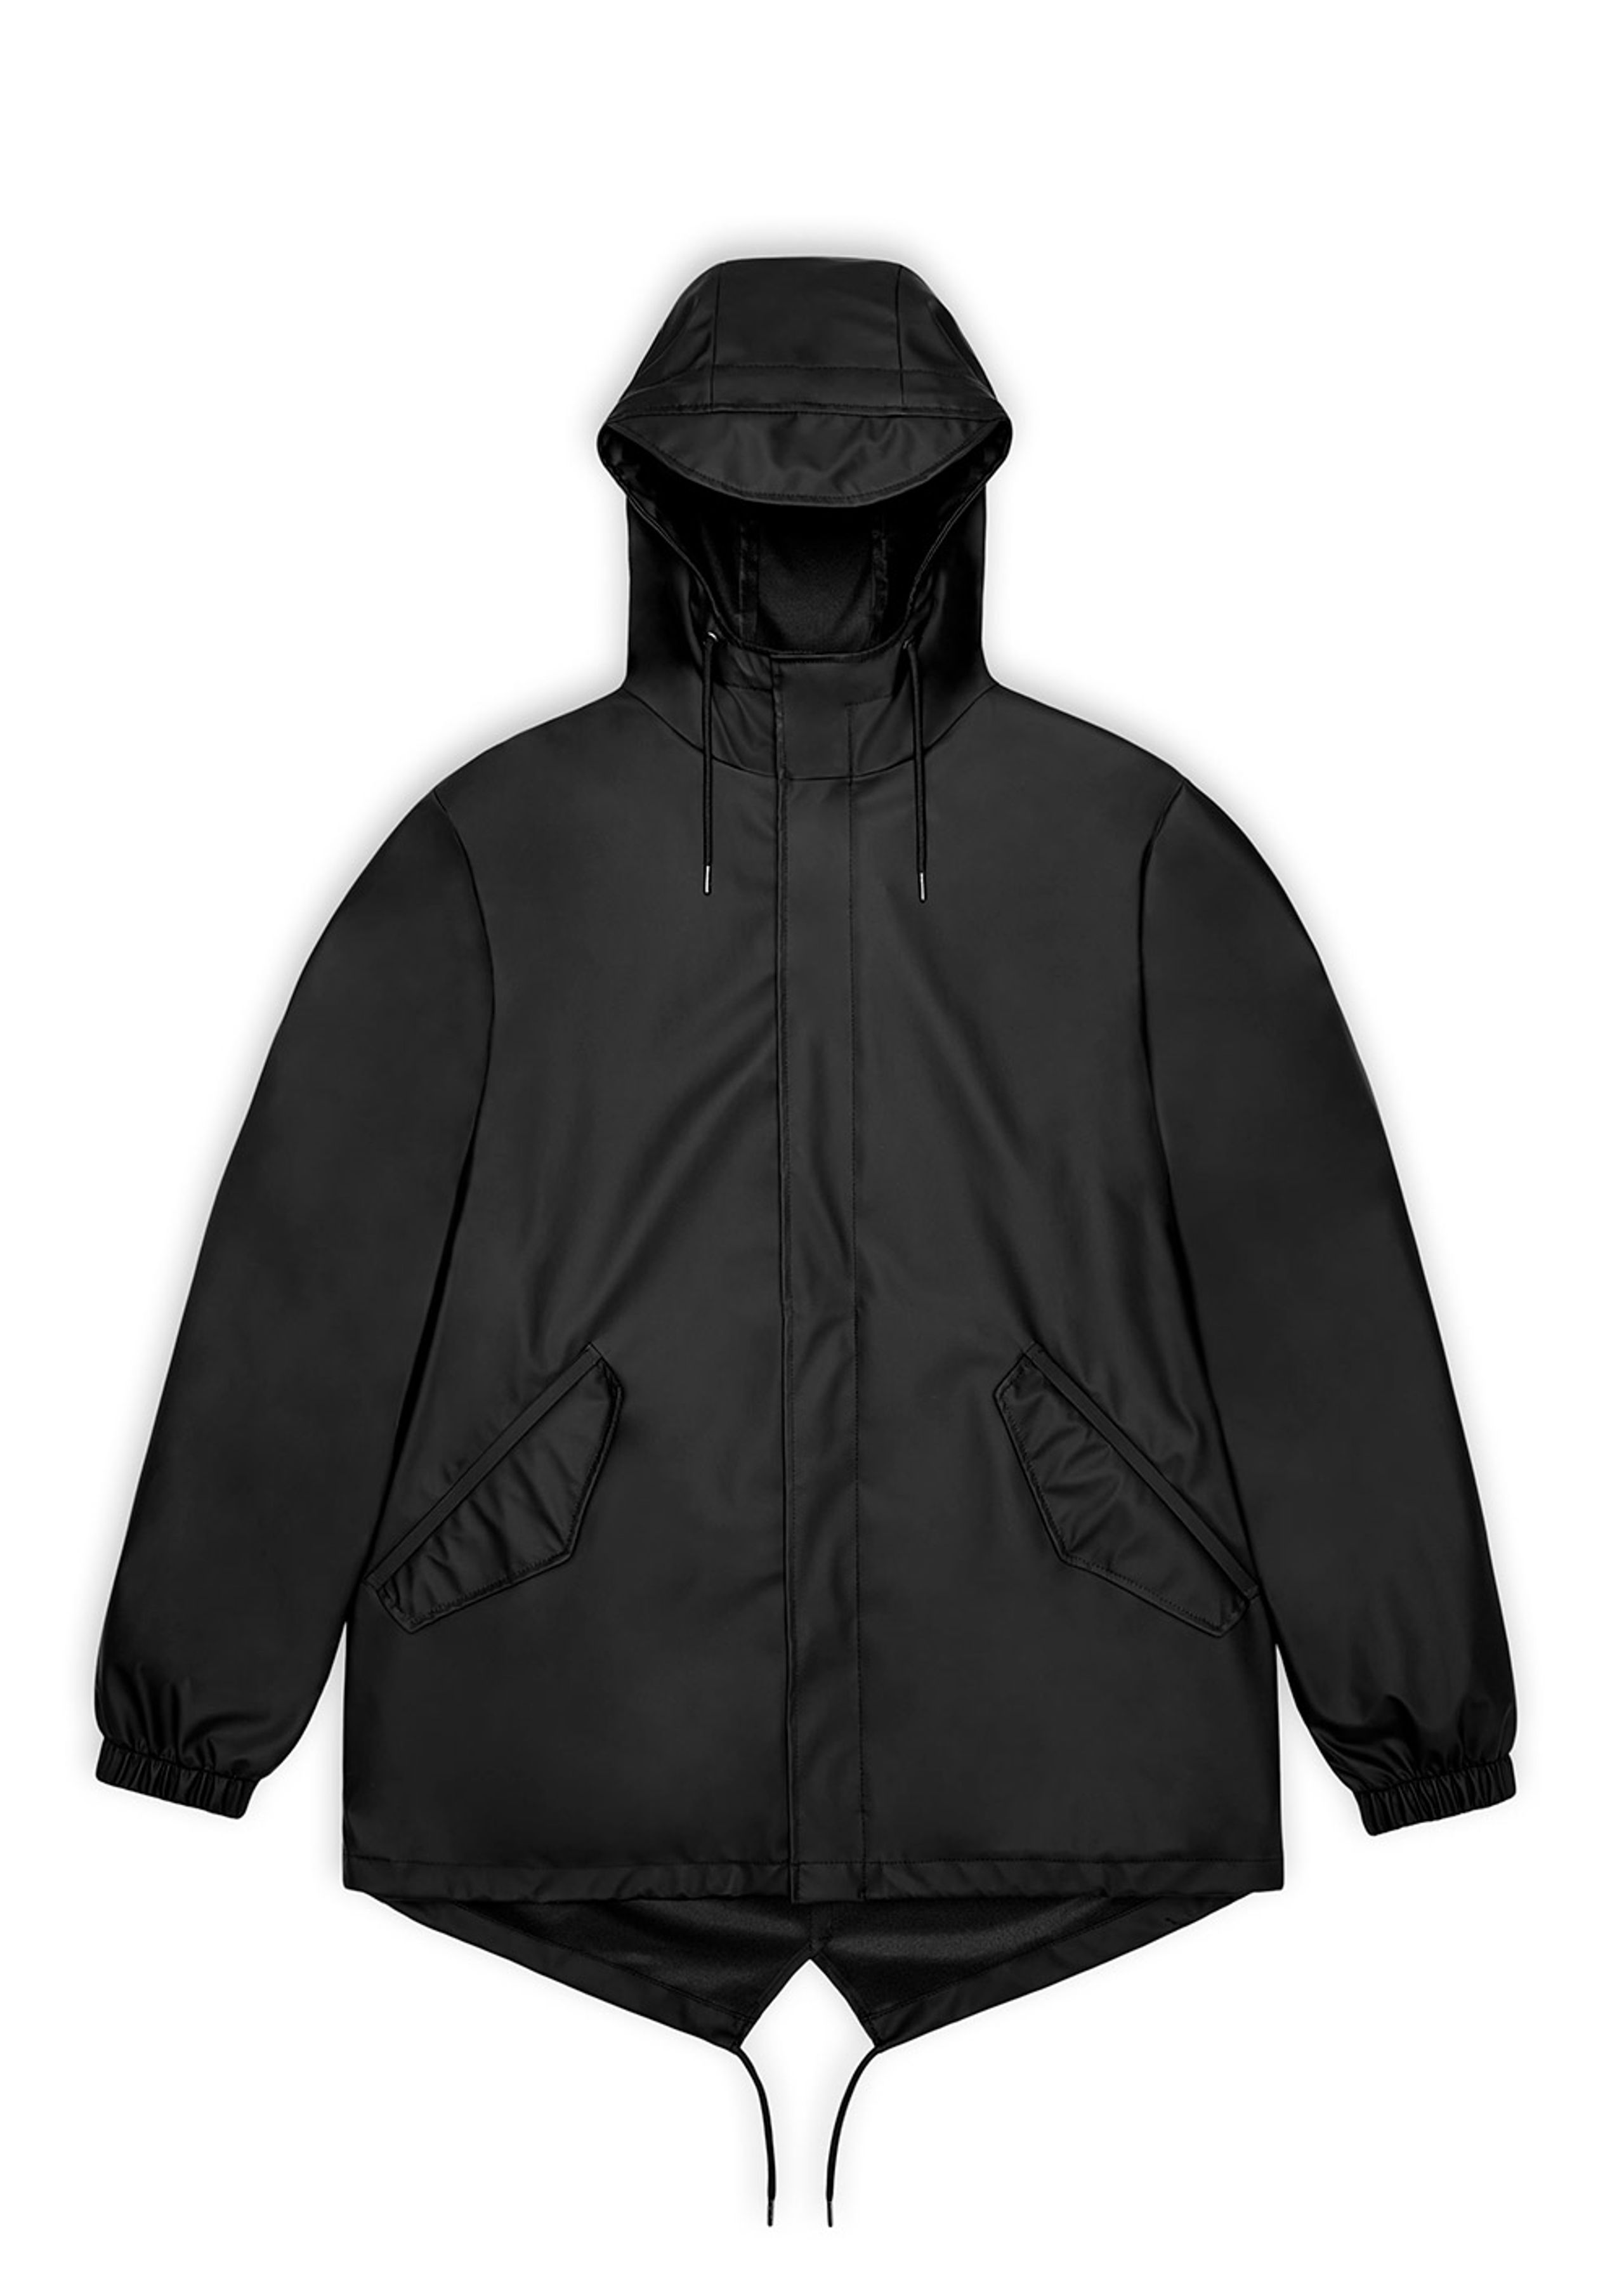 Rains - Regenmantel - Fishtail Jacket W3 - Black